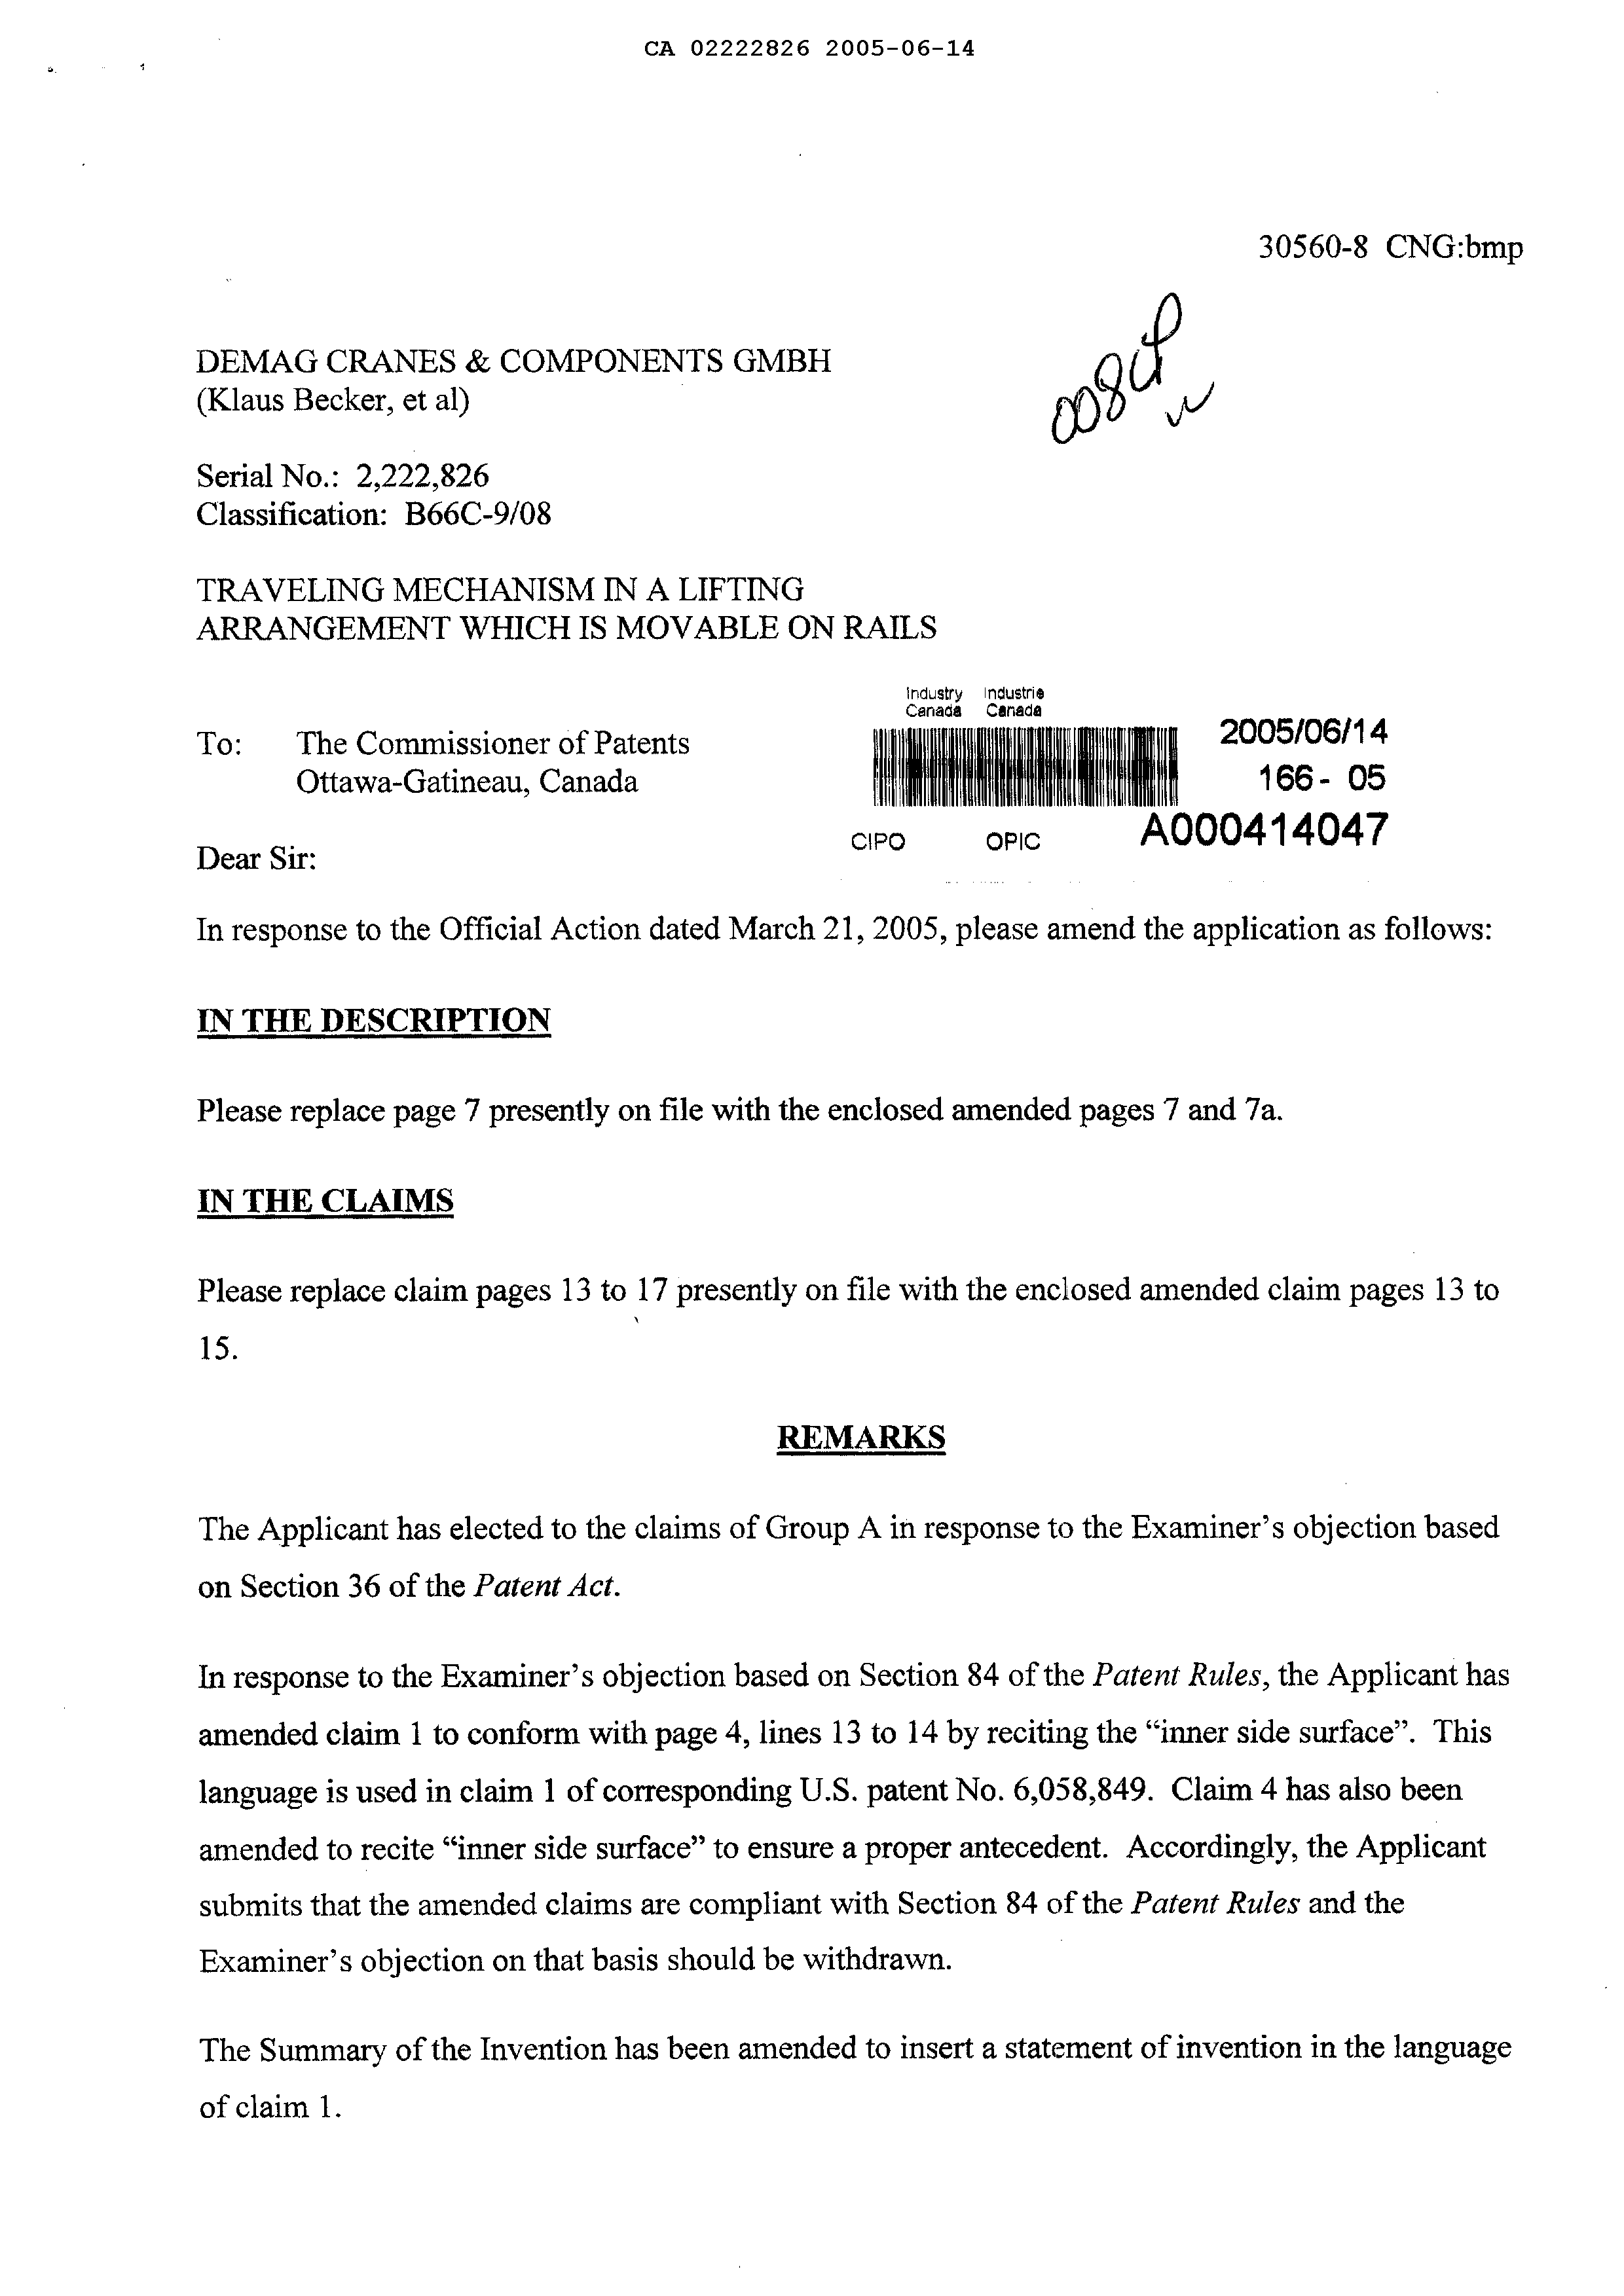 Canadian Patent Document 2222826. Prosecution-Amendment 20050614. Image 1 of 7